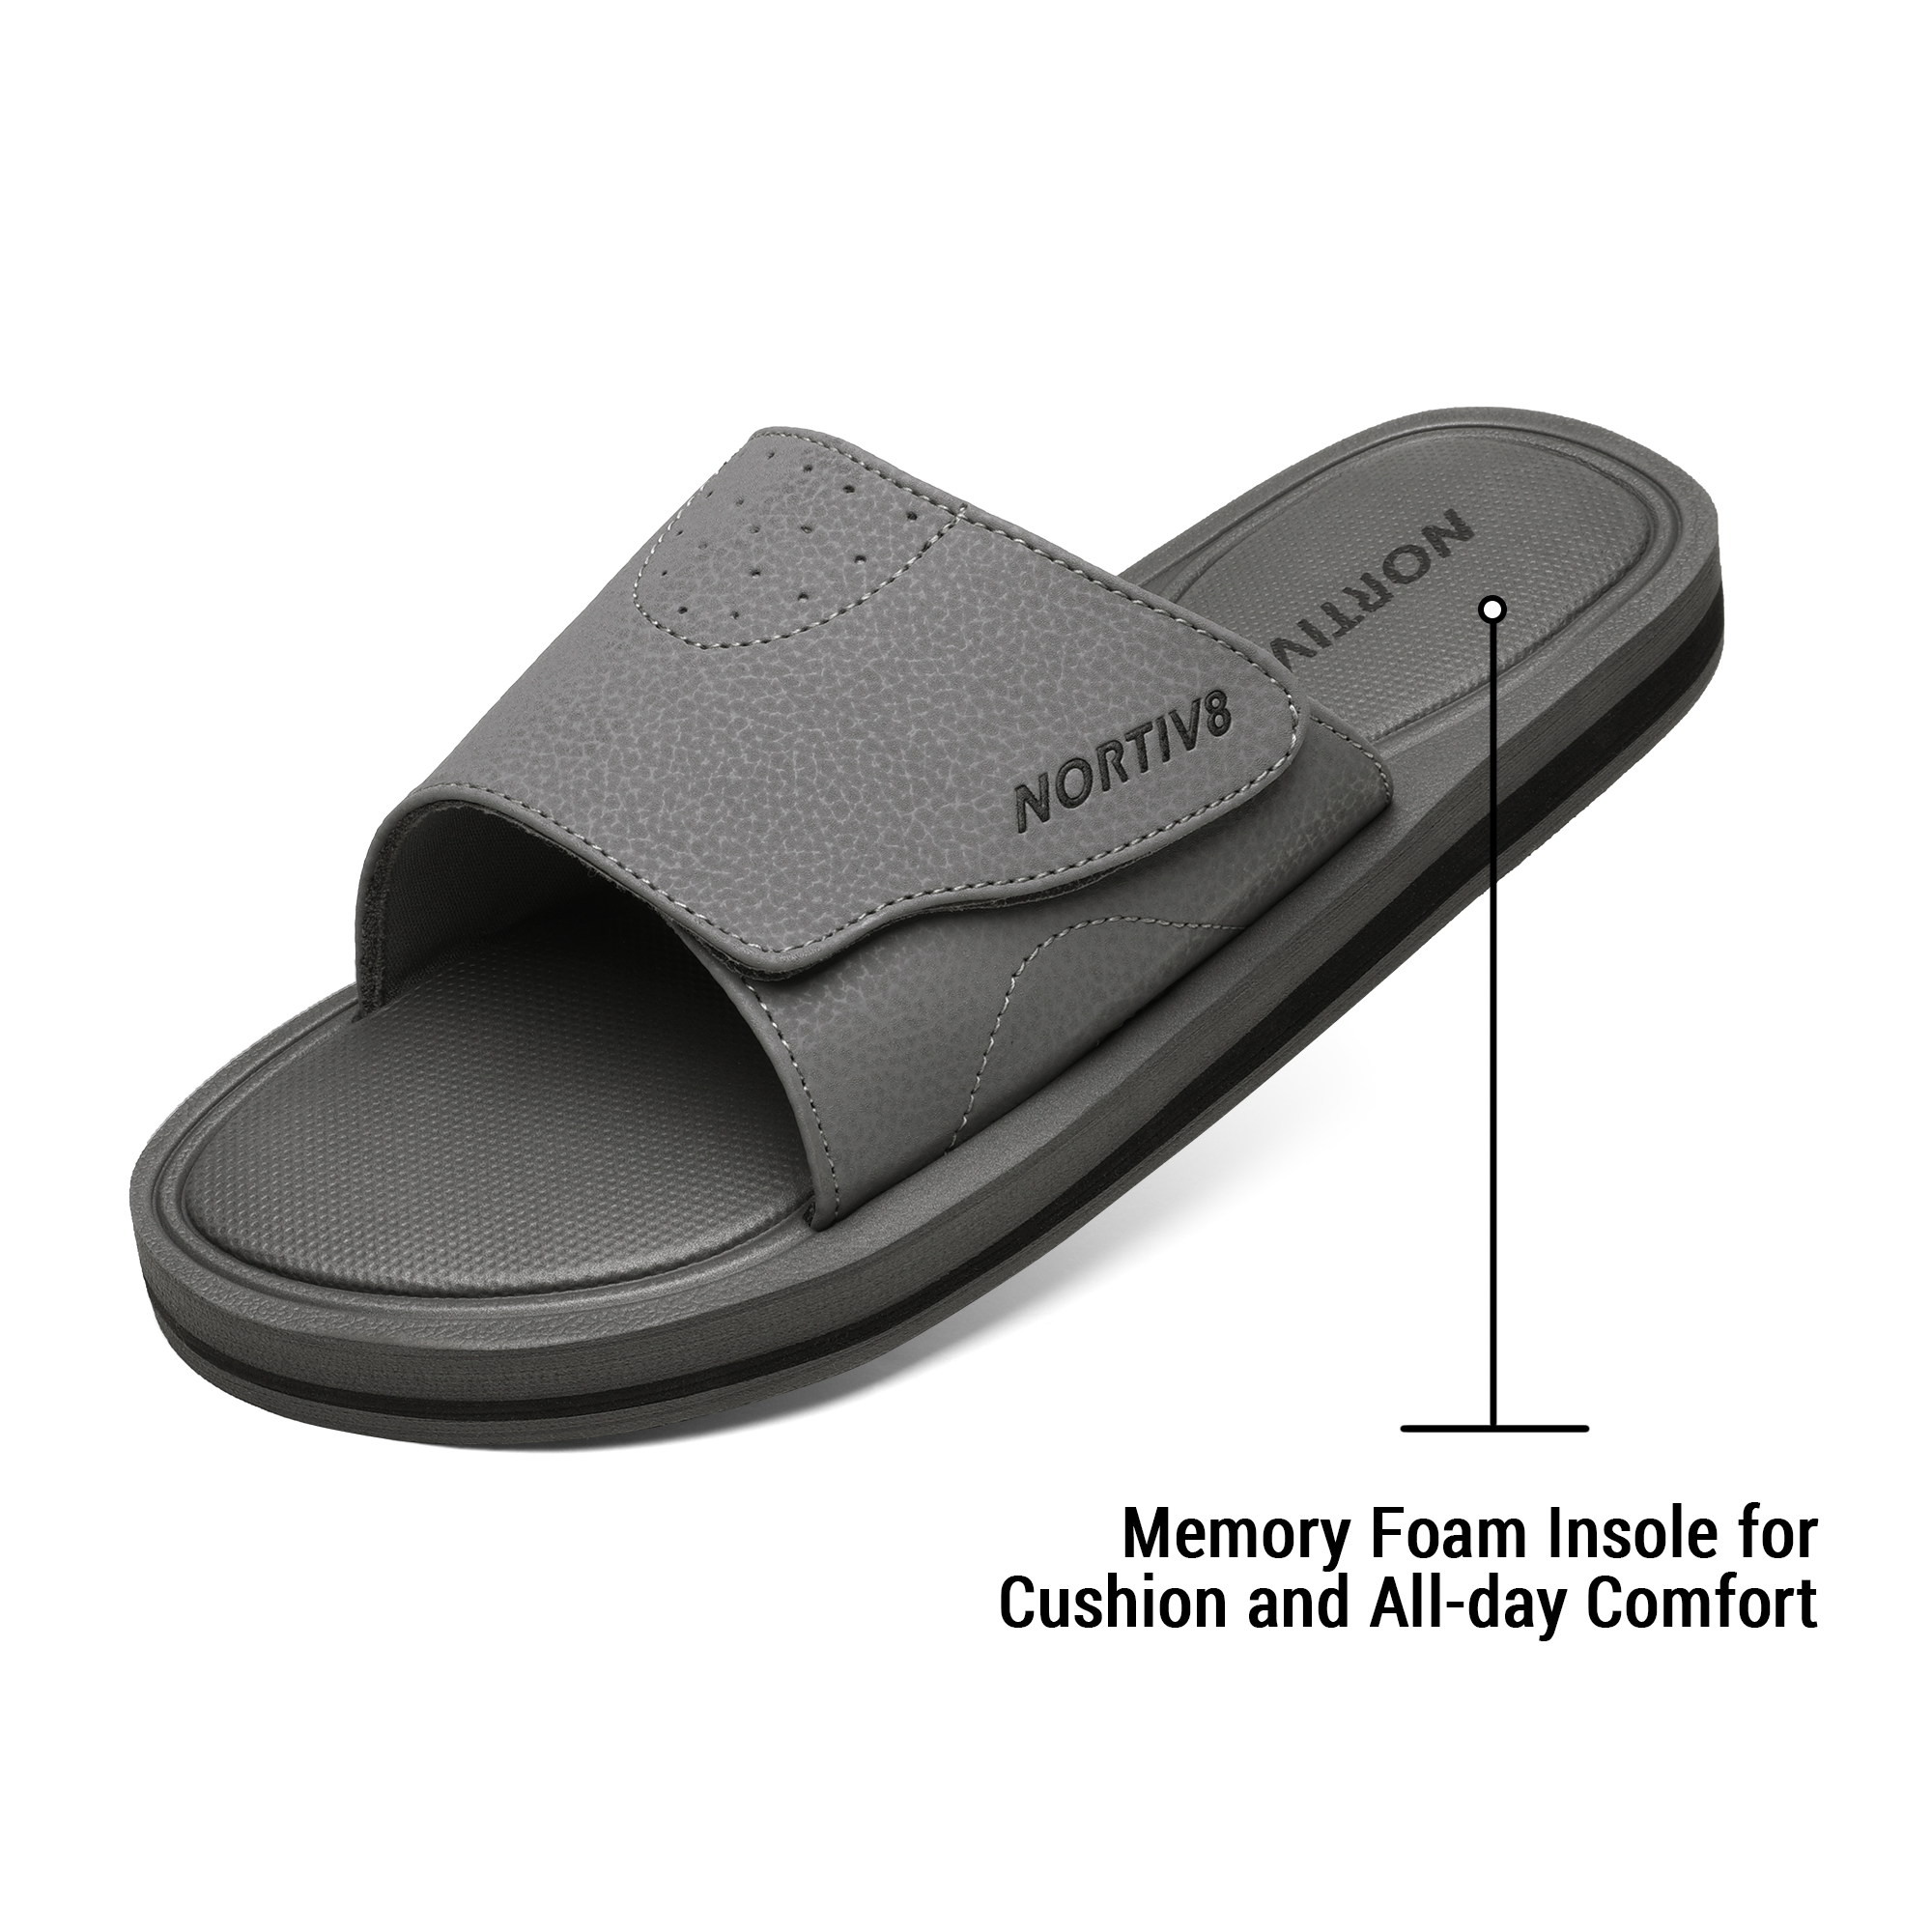 Nortiv8 Men's Memory Foam Adjustable Slide Sandals Comfort Lightweight Summer Beach Sandals Shoes FUSION GREY Size 9 - image 2 of 5